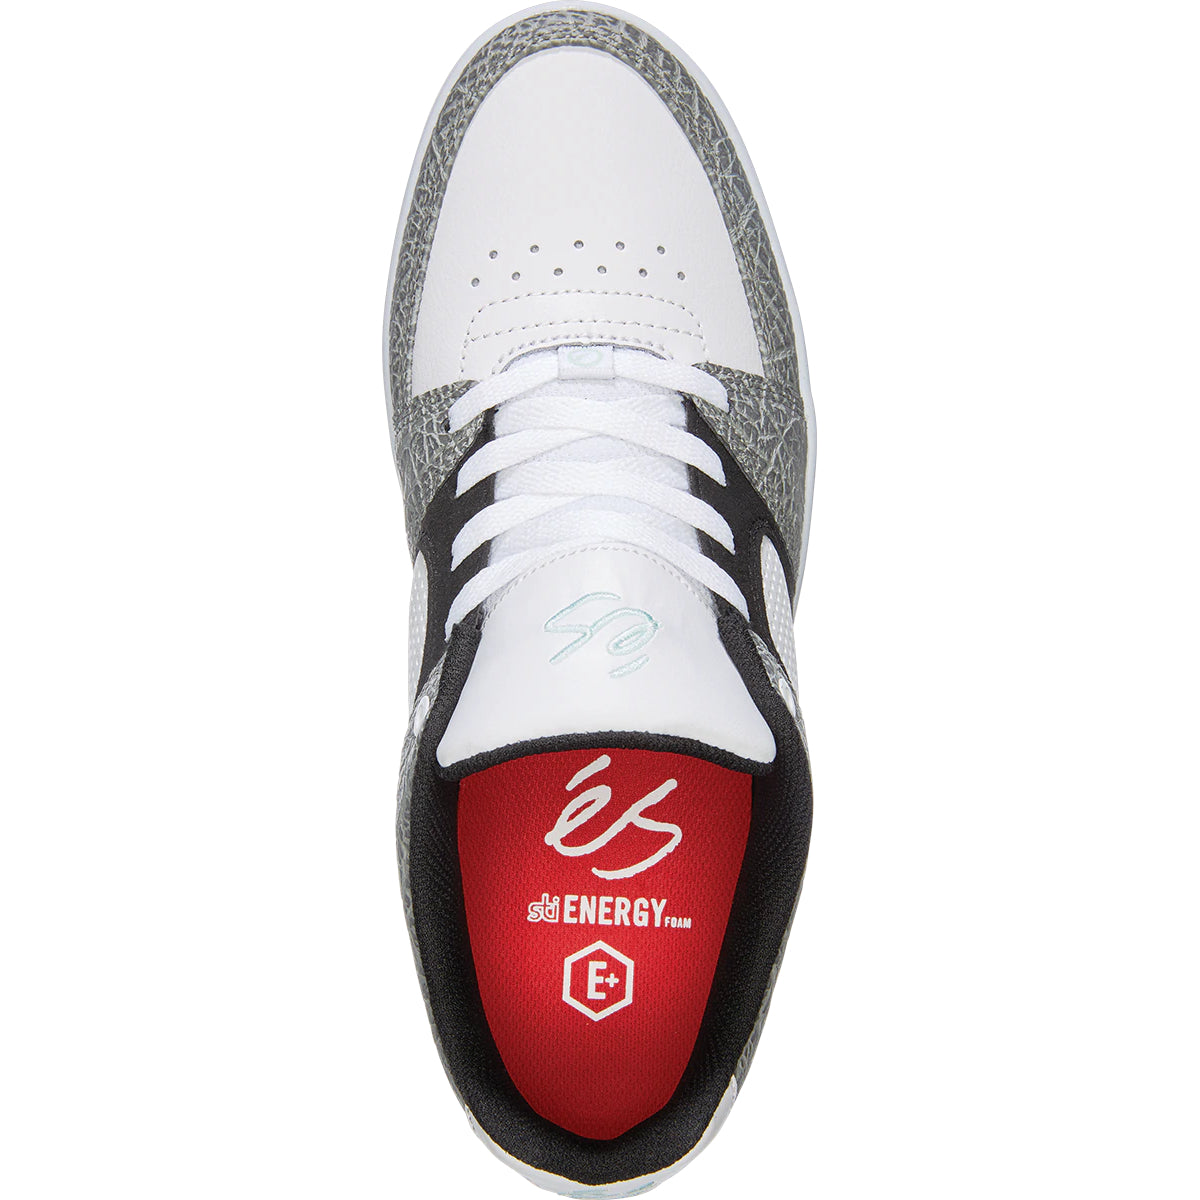 White/Turquiose Accel Slim eS Skateboarding Shoe Top